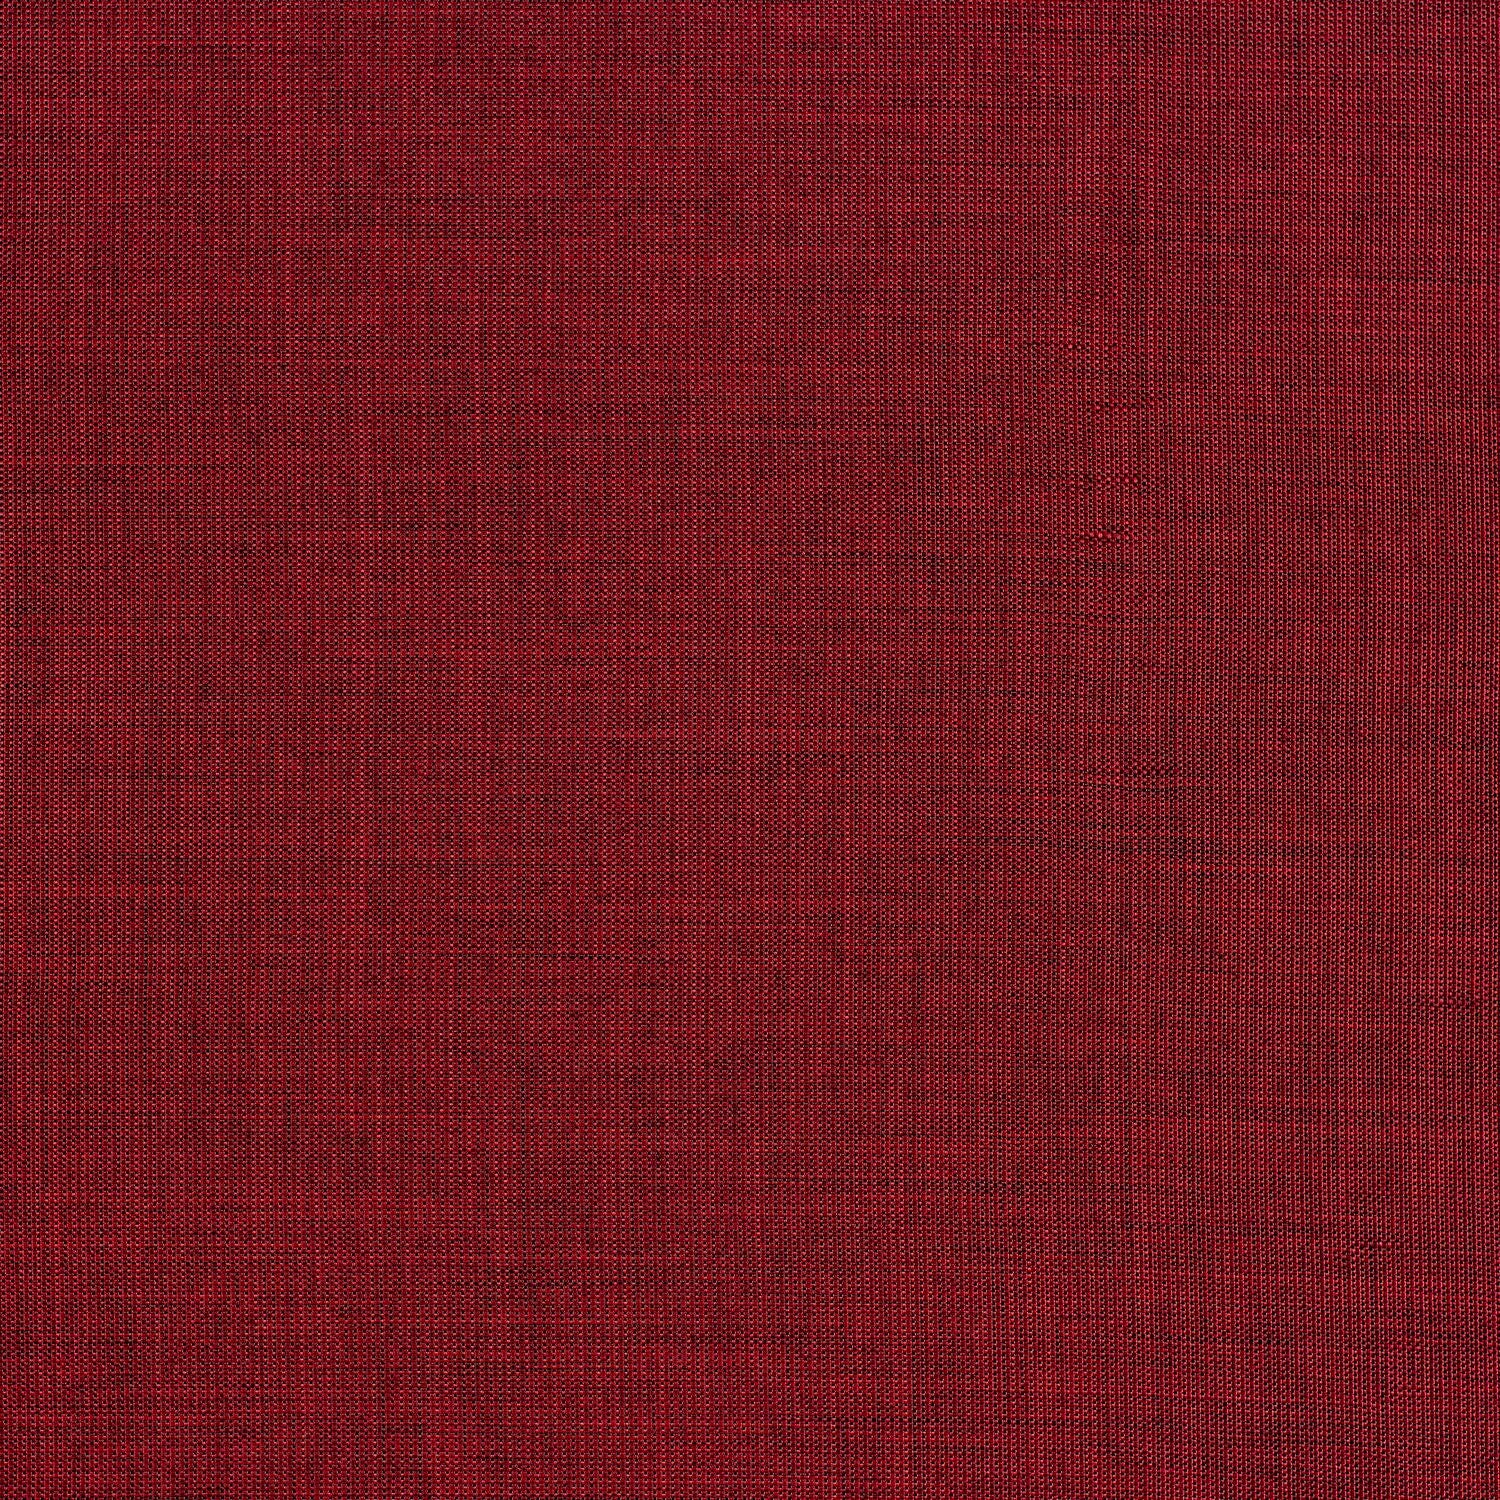 Complect - Deep Crimson - 1032 - 09